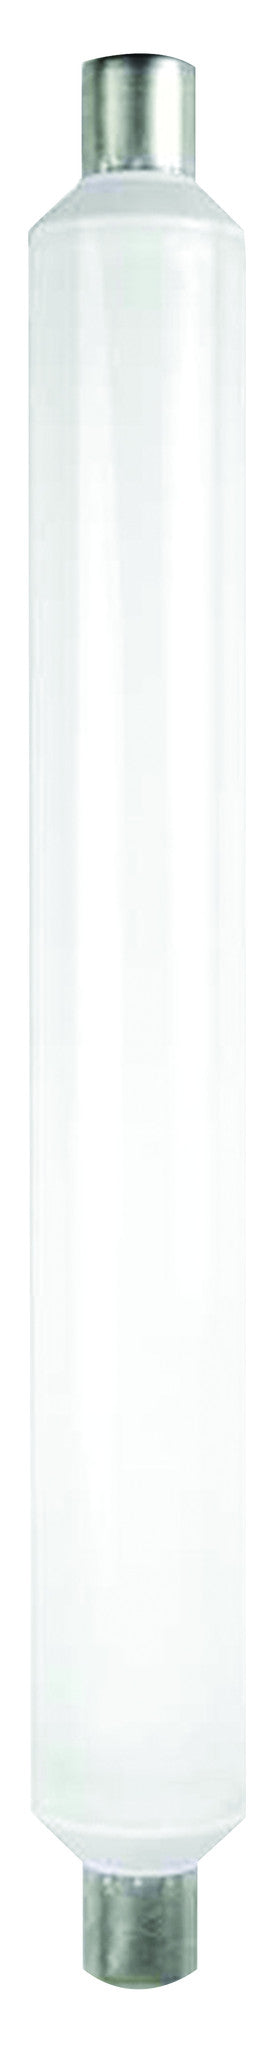 997108 - Tube Linolite LED S19 309mm 12W 2700K 1000Lm